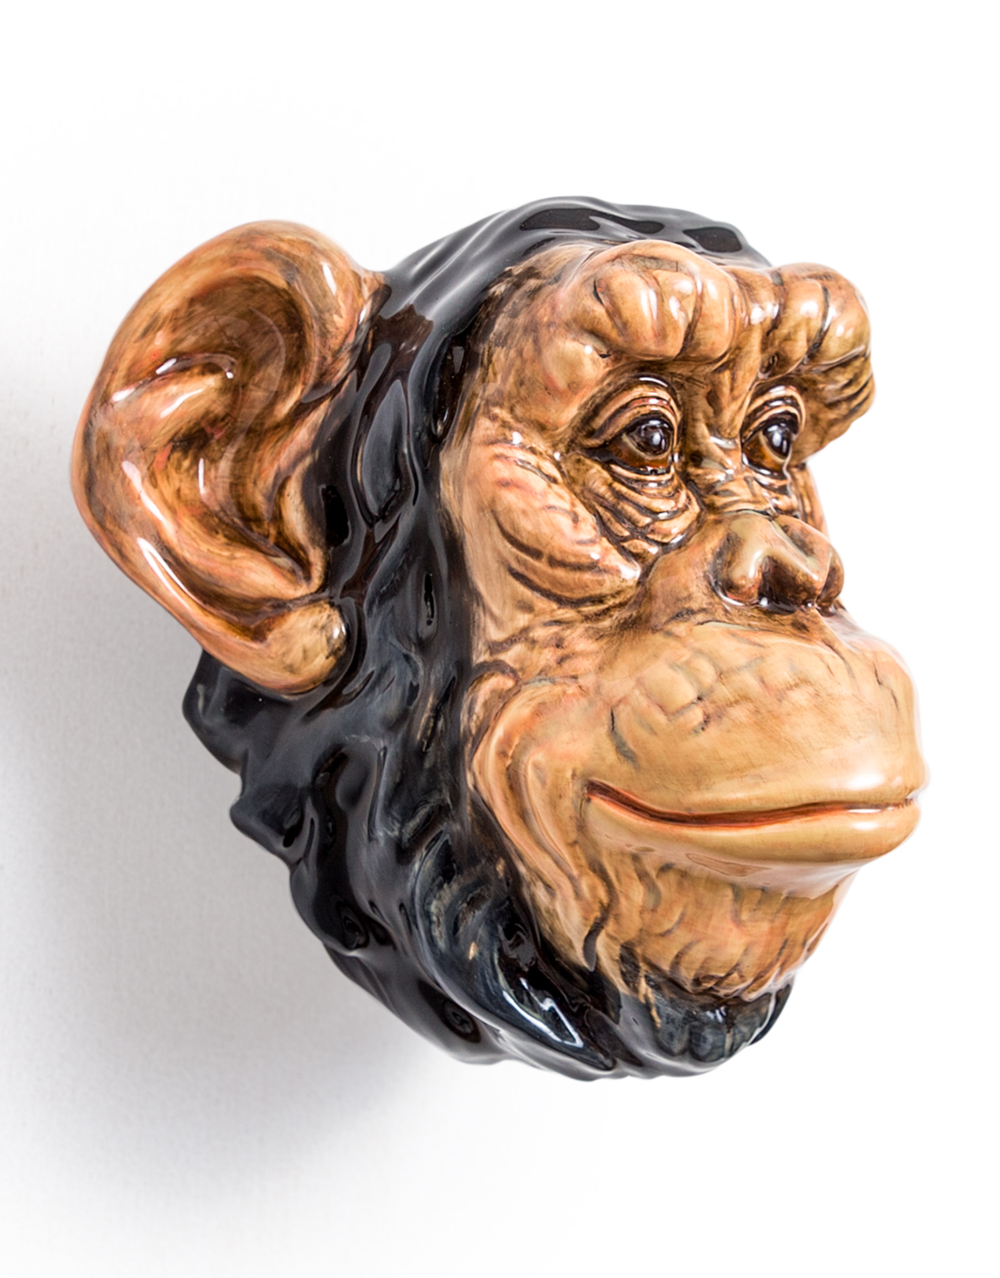 Ceramic Chimpanzee Wall vase